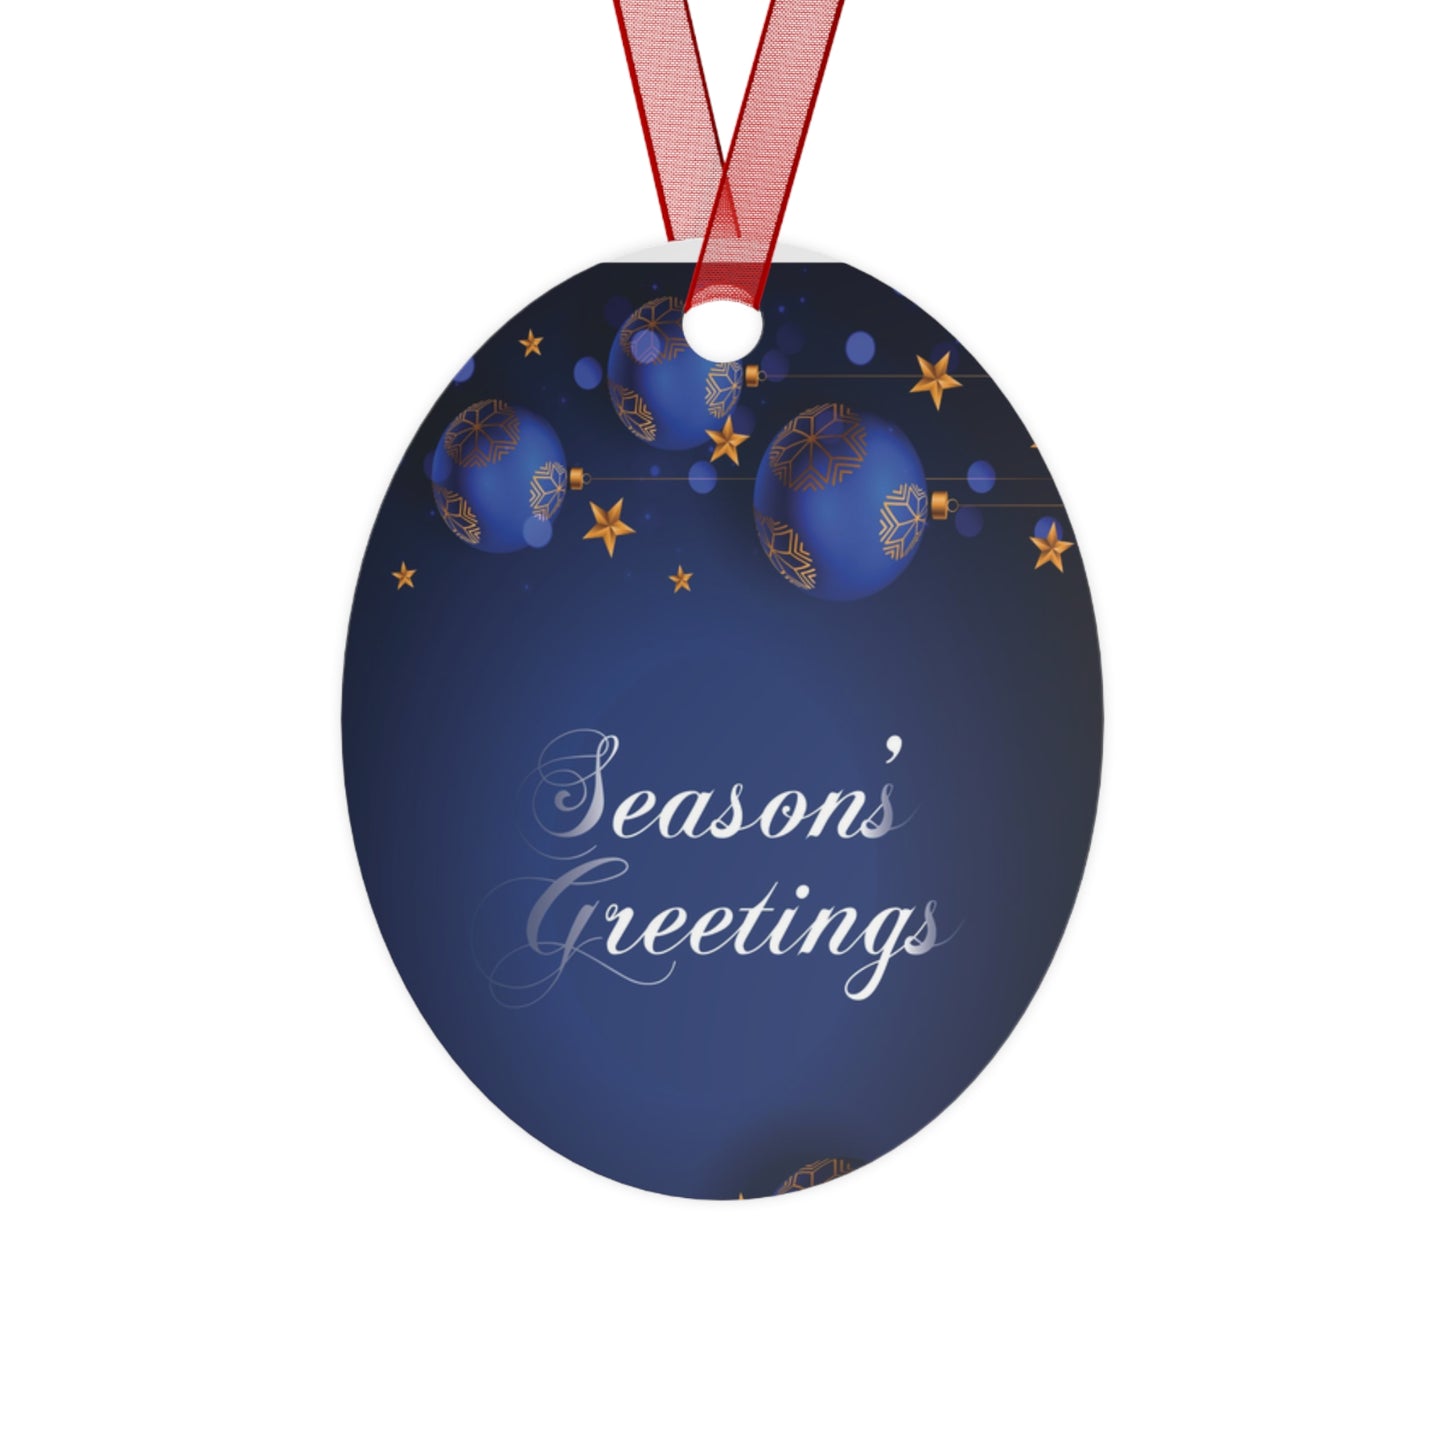 Season's Greetings Metal Ornaments for Festivals, Blue